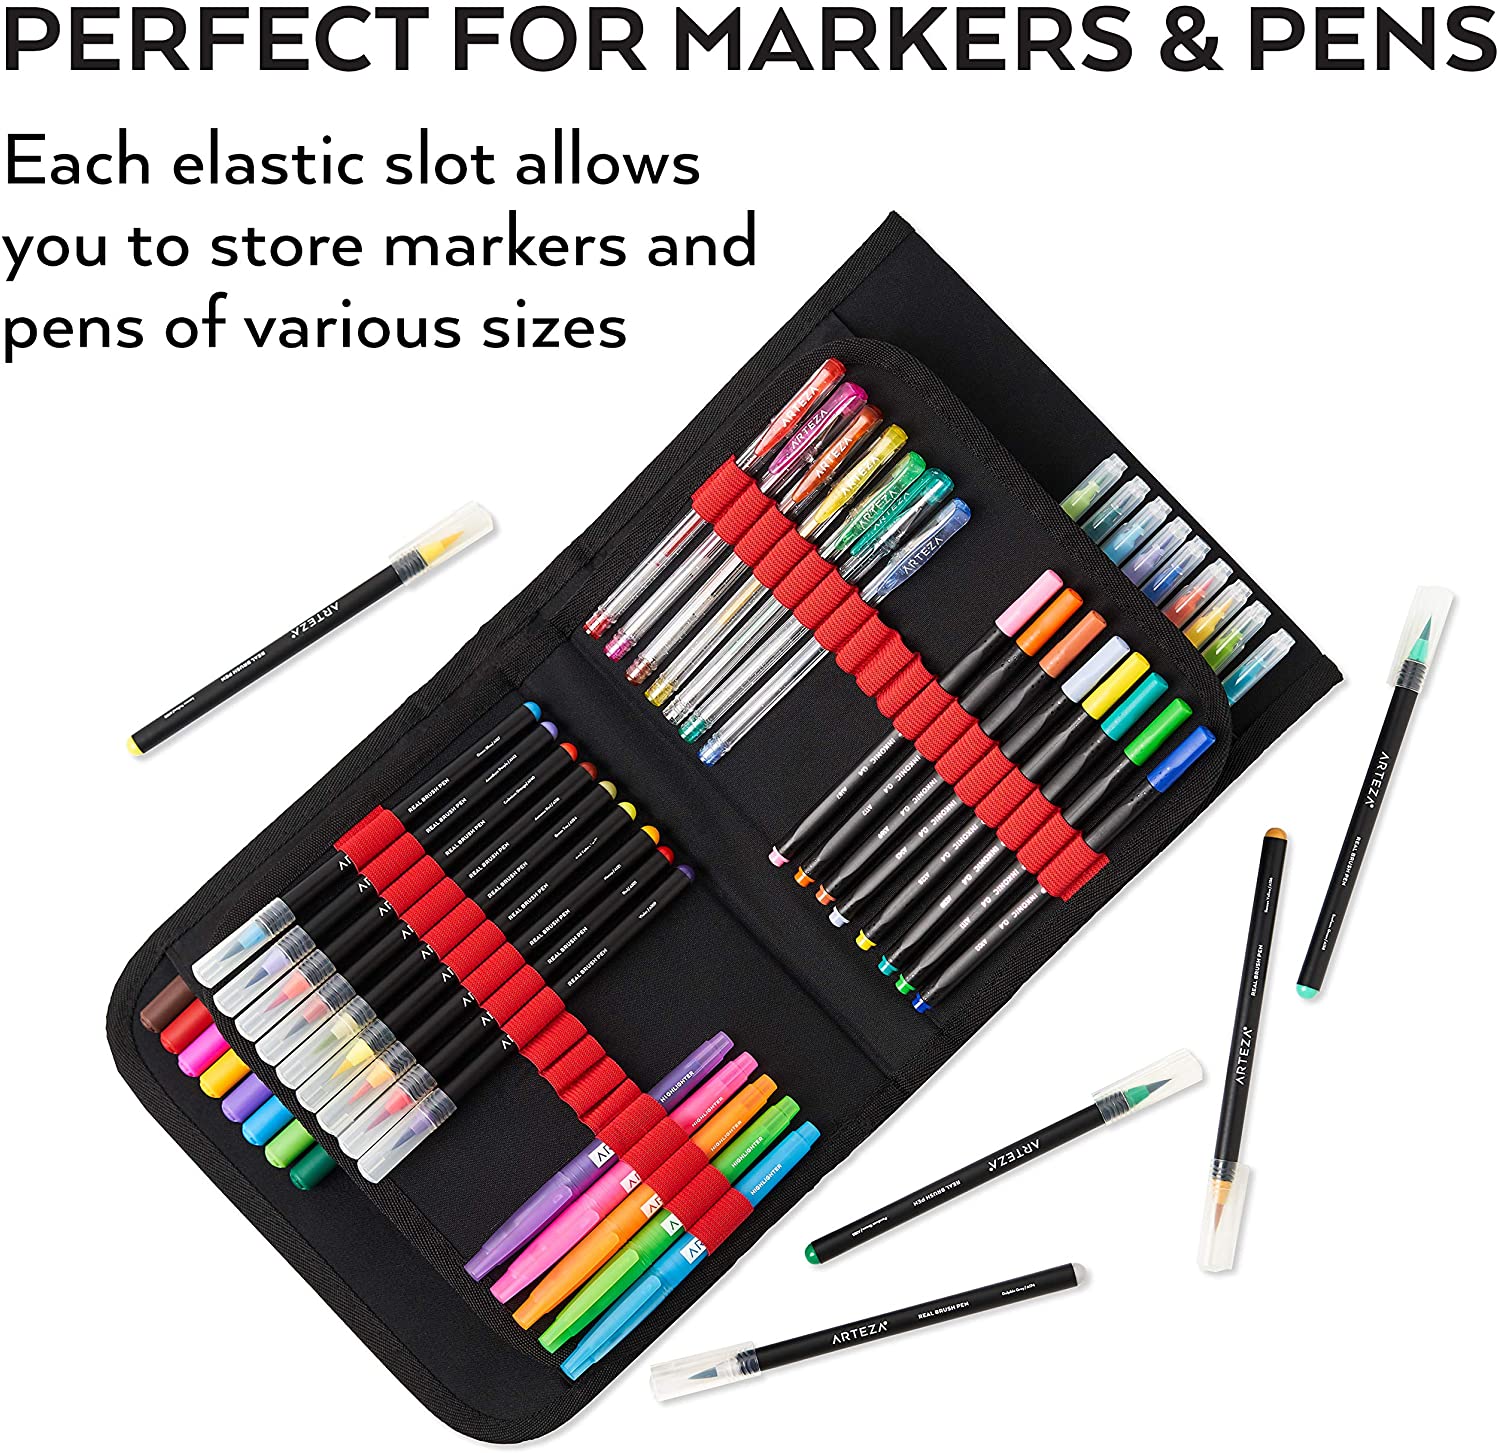  Pen, Pencil & Marker Cases